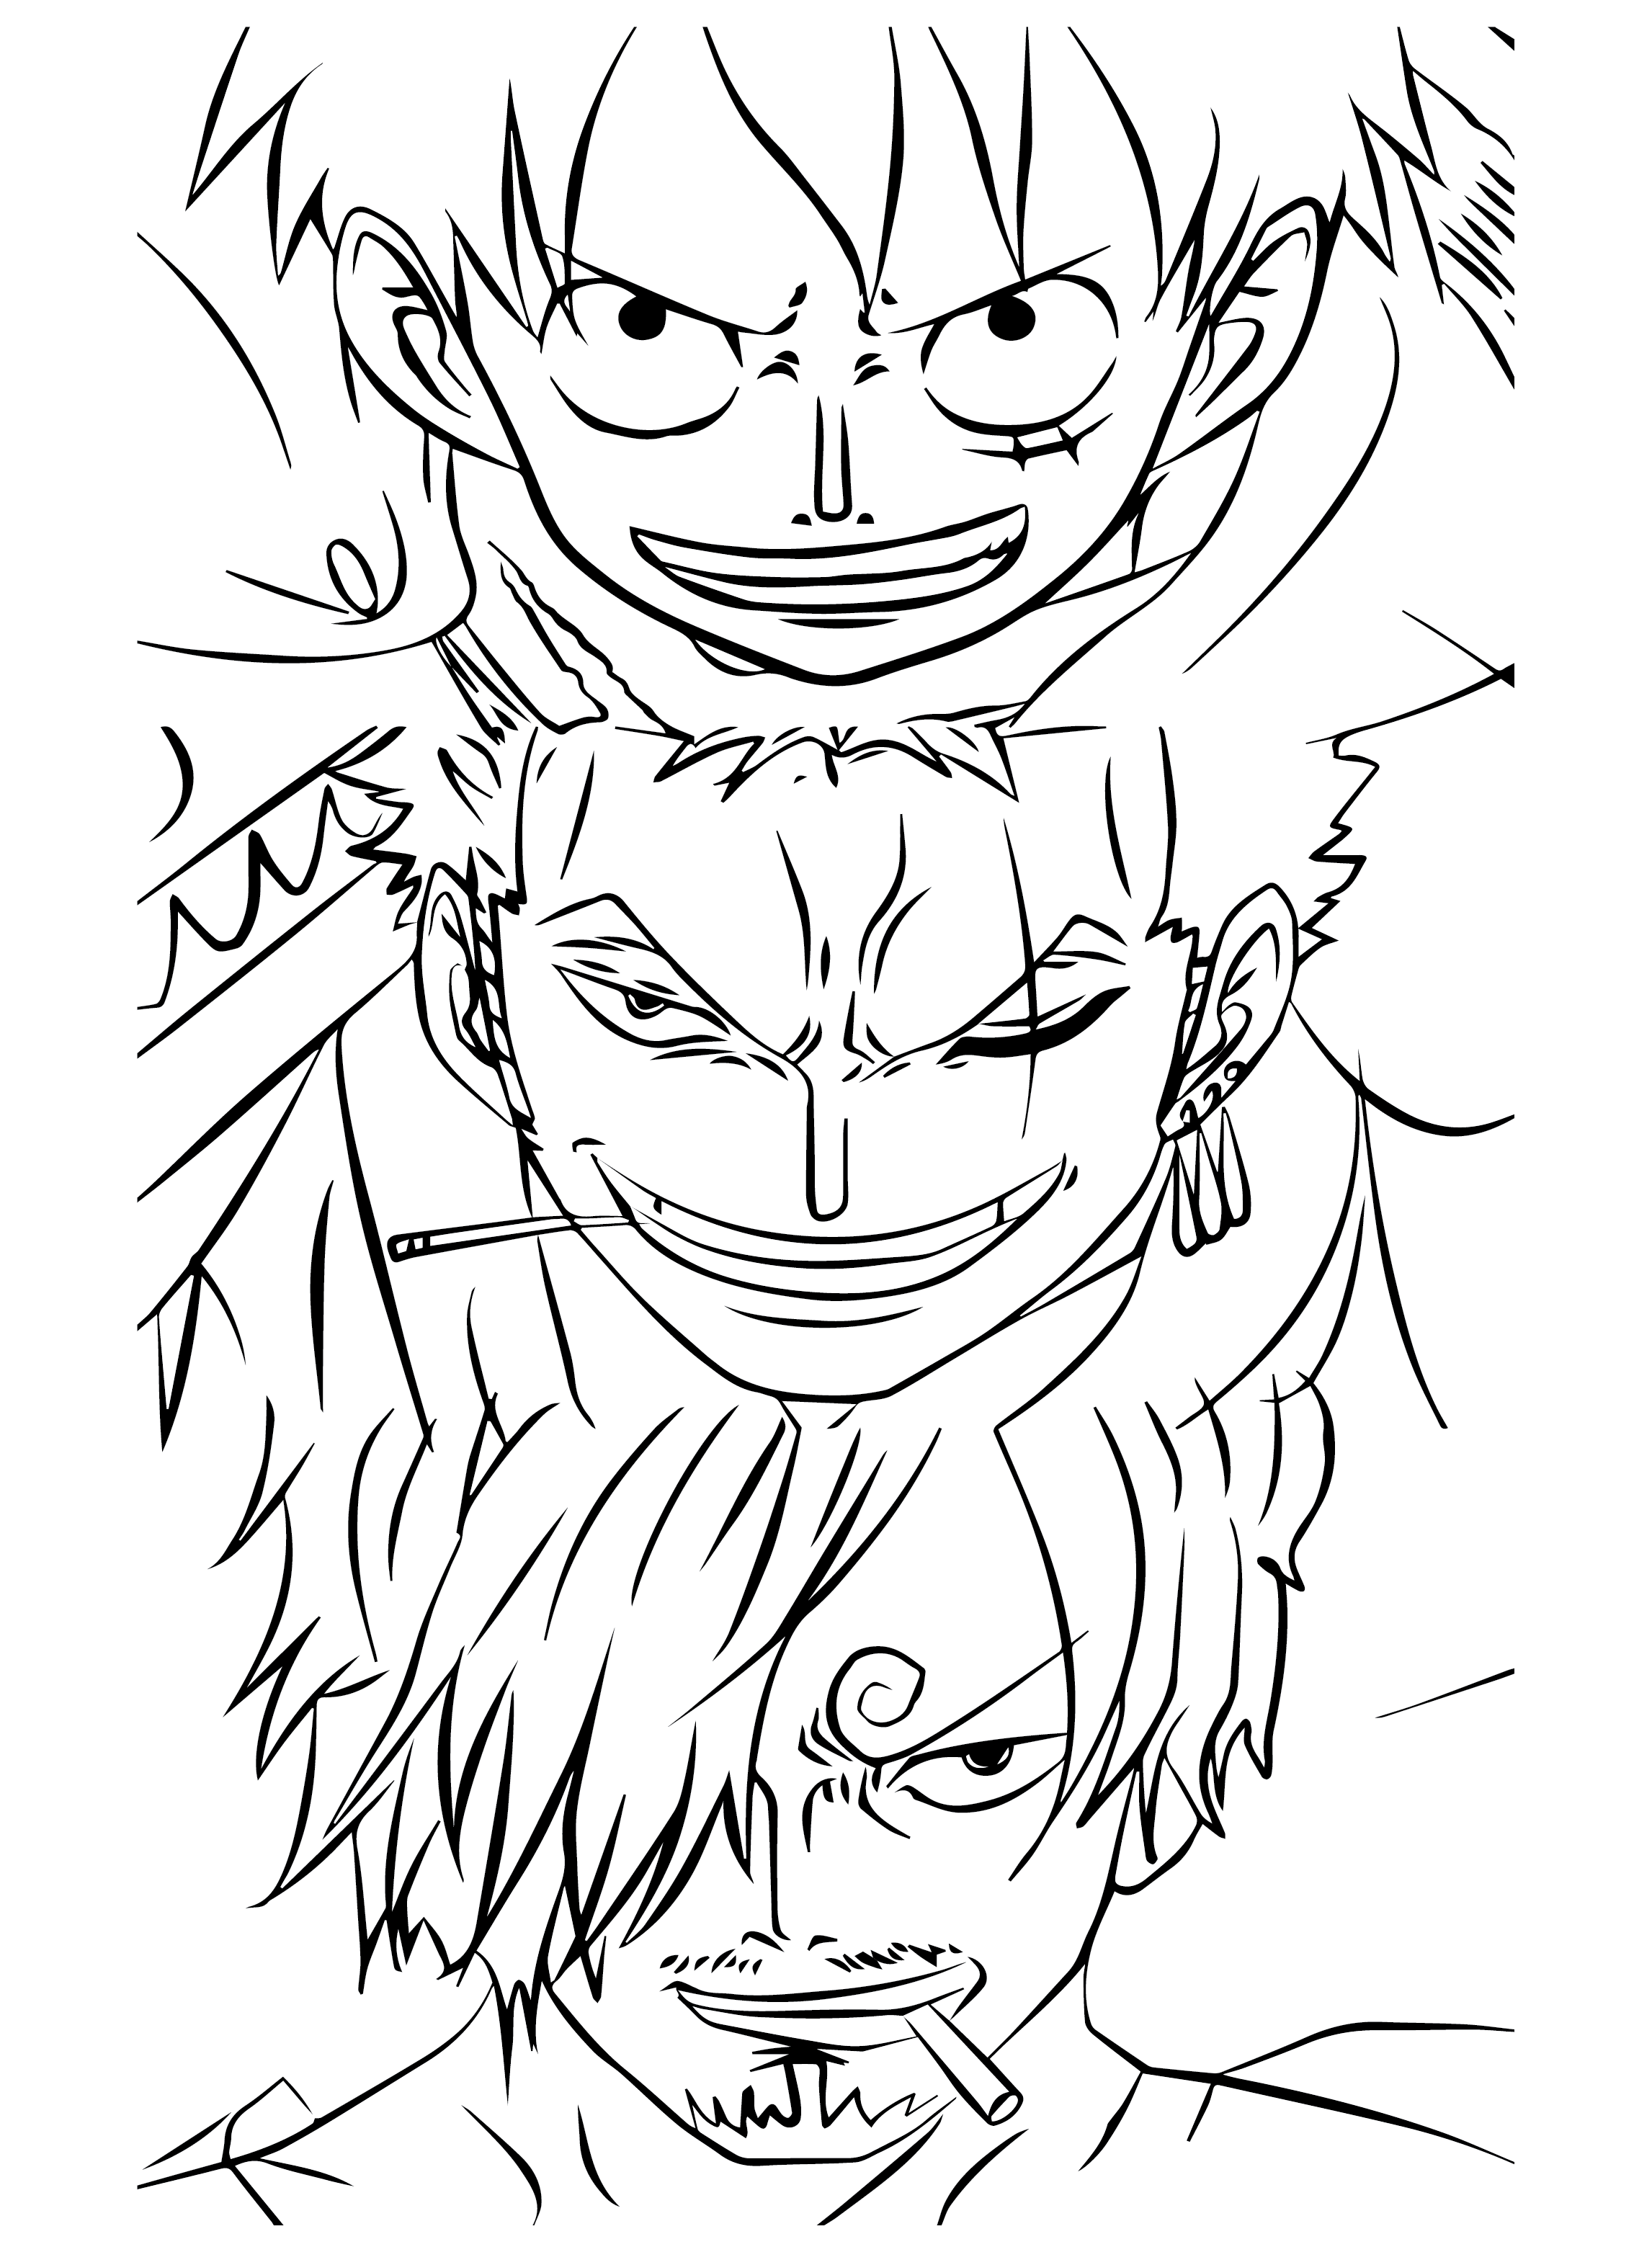 Luffy, Zoro, Sanji Coloring Page to Print from Vinsmoke Sanji